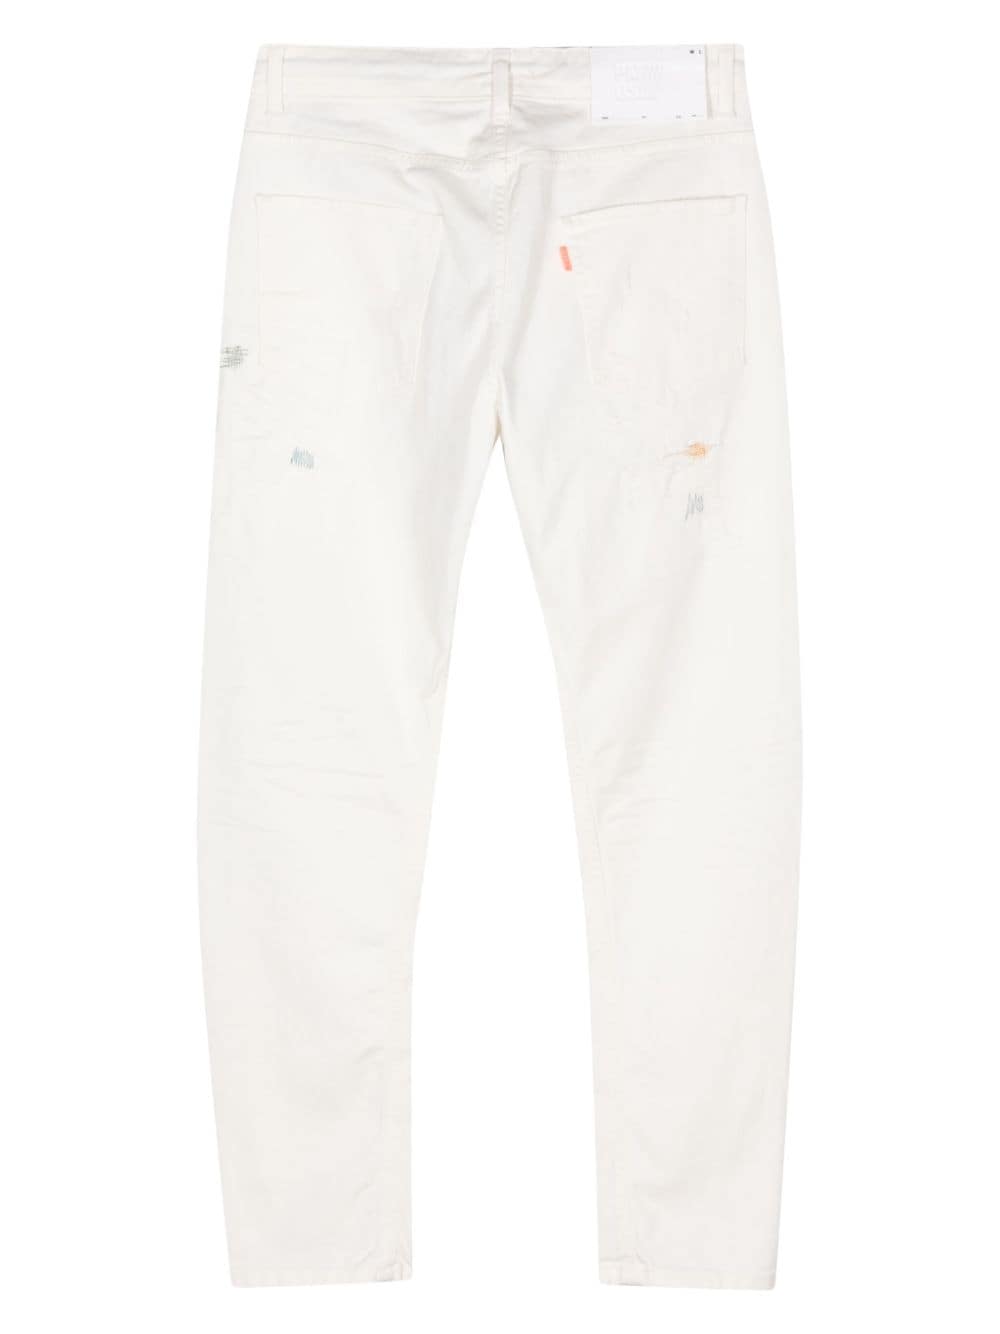 PMD Barret Twist distressed jeans - Beige